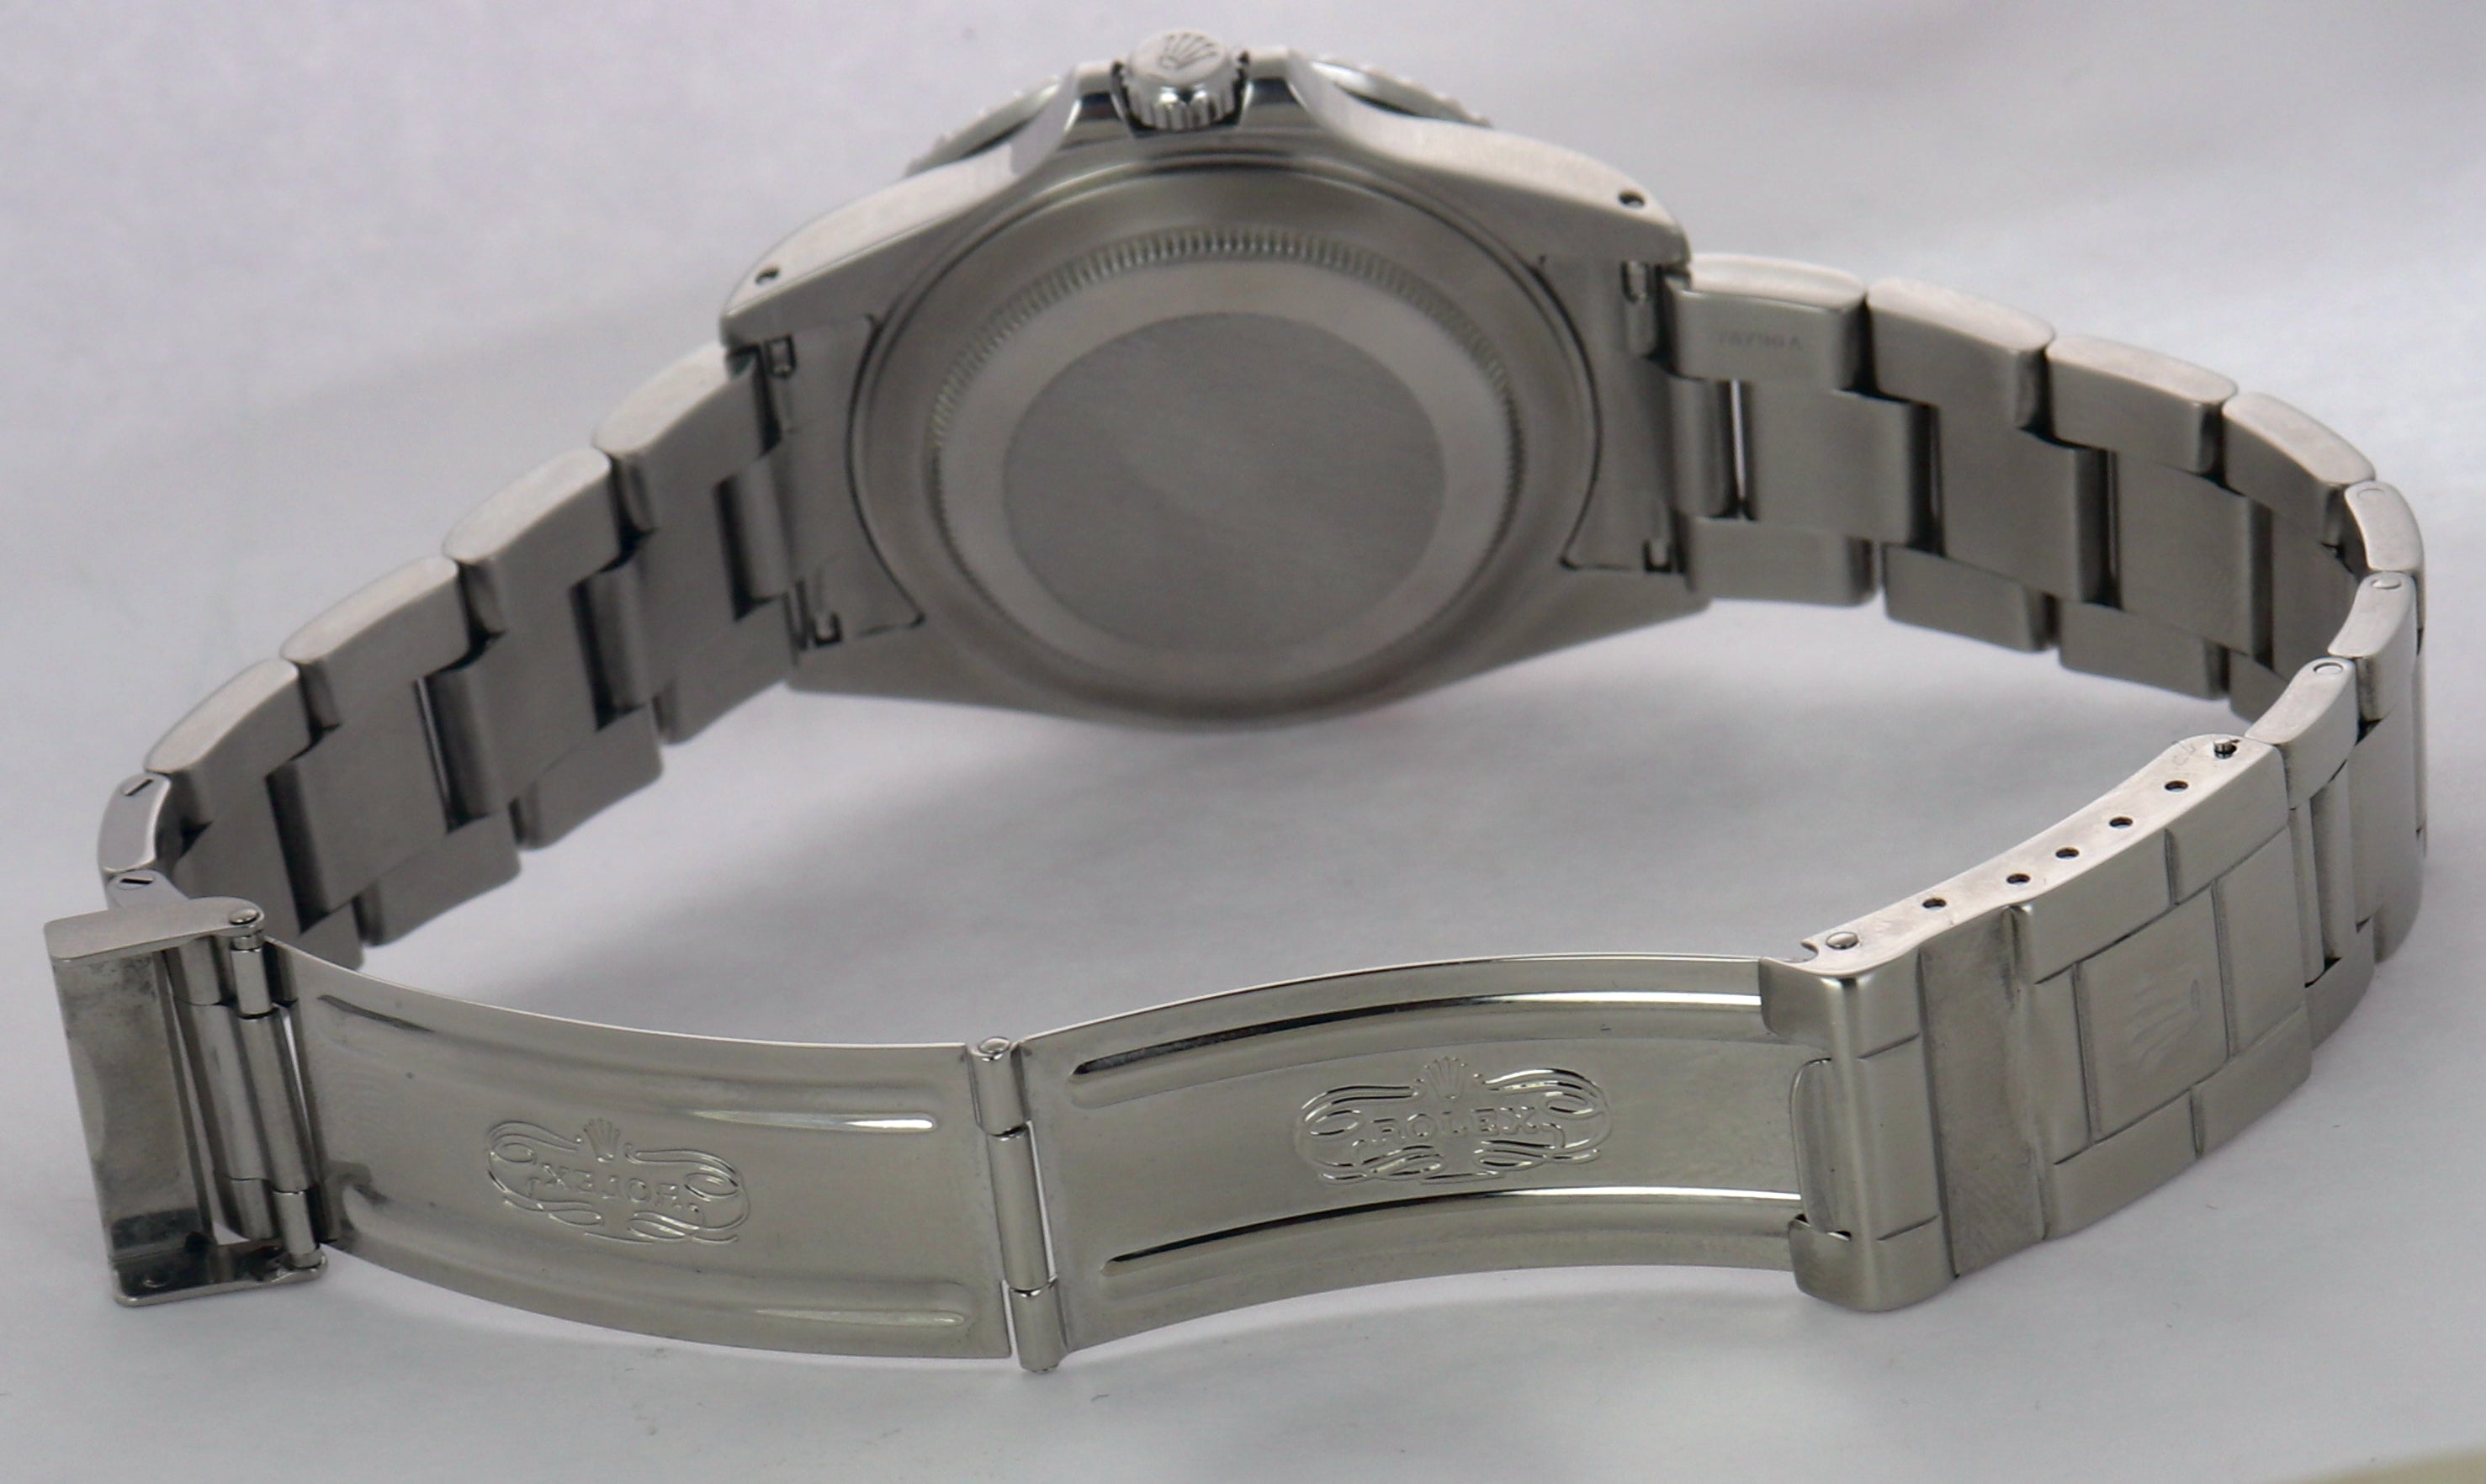 MINT 2002 Rolex GMT-Master II Black 16710 Y Stainless Steel 40mm SEL Watch PAPER